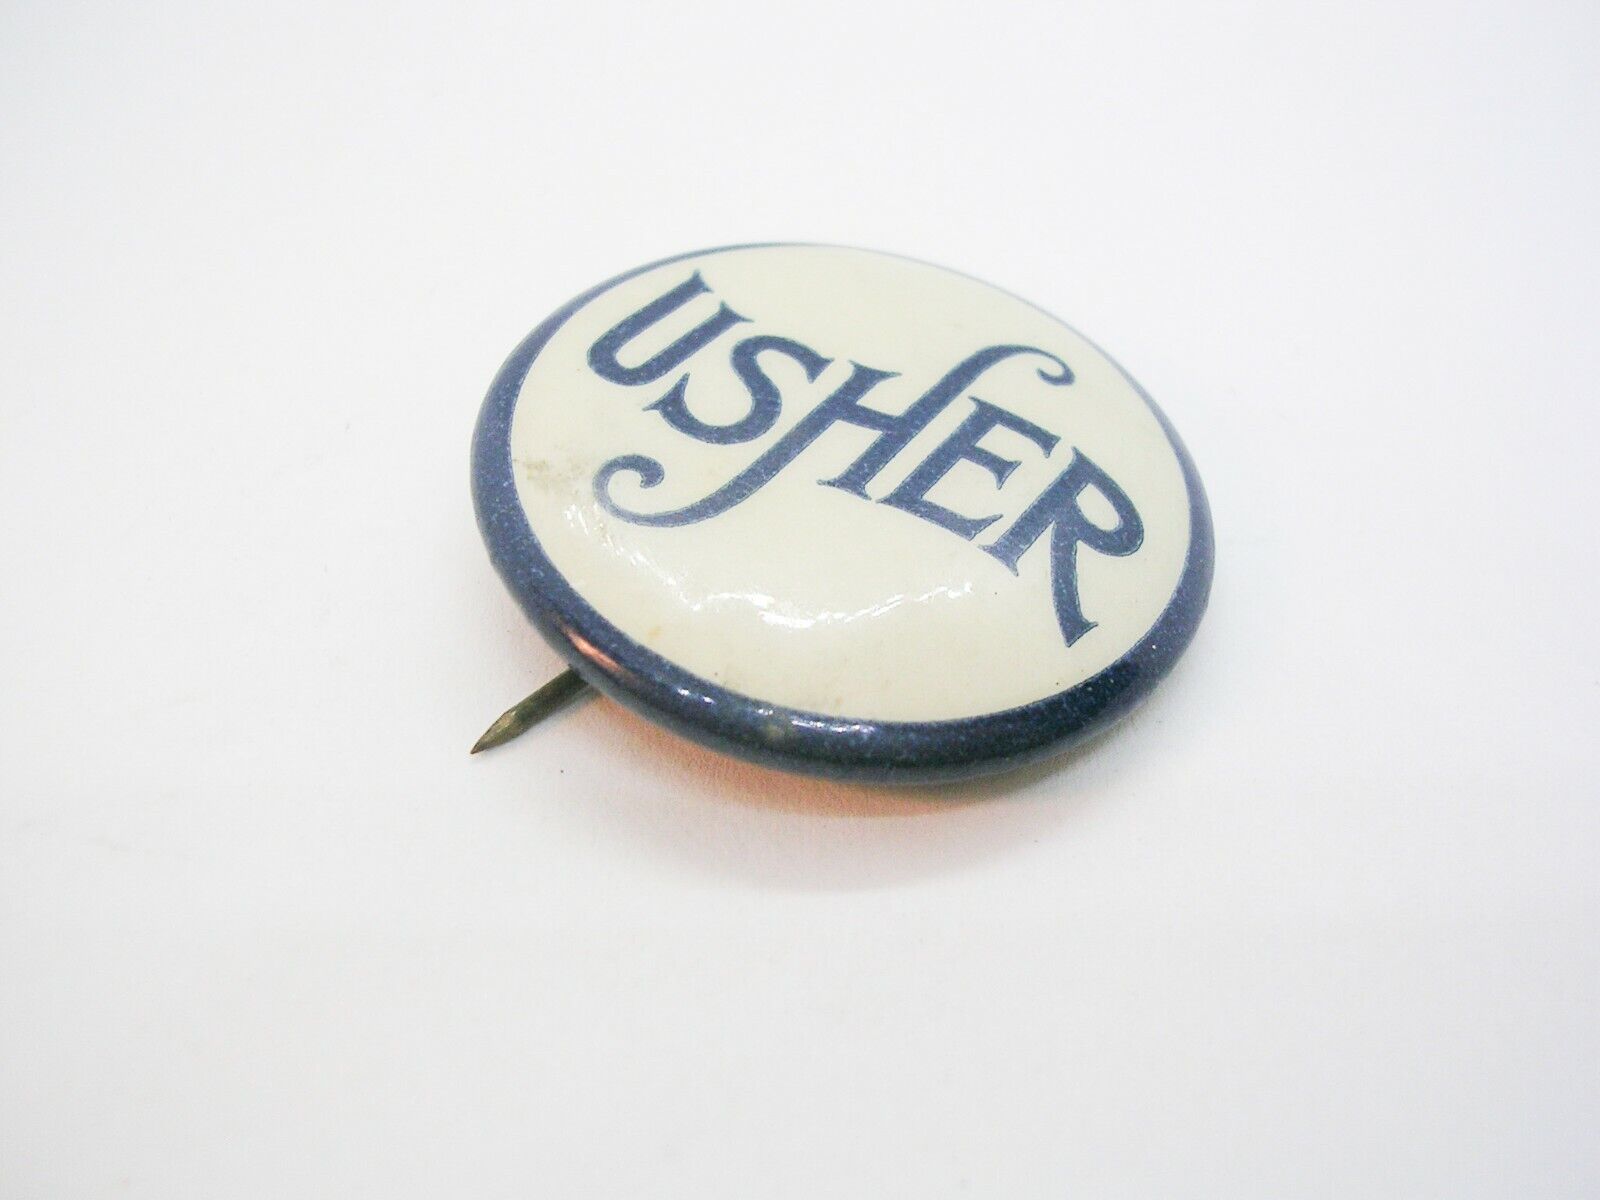 Antique Pin USHER Button